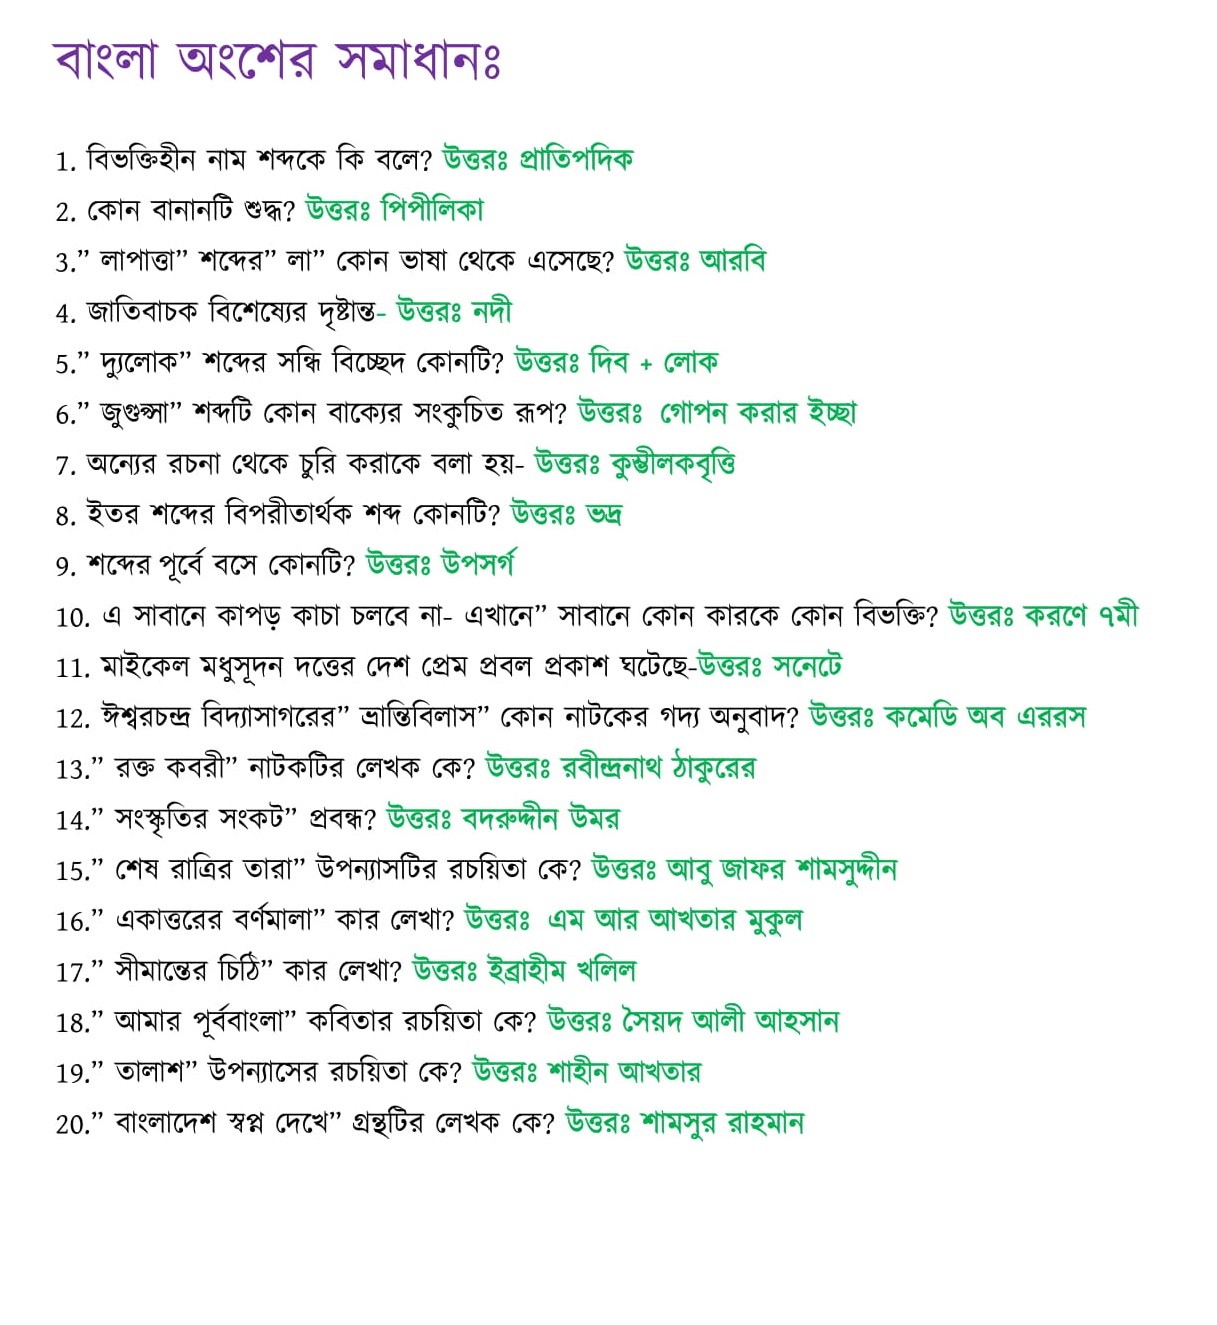 Jubo Unnoyon Odhidoptor (Bangla) Question Solution 2019